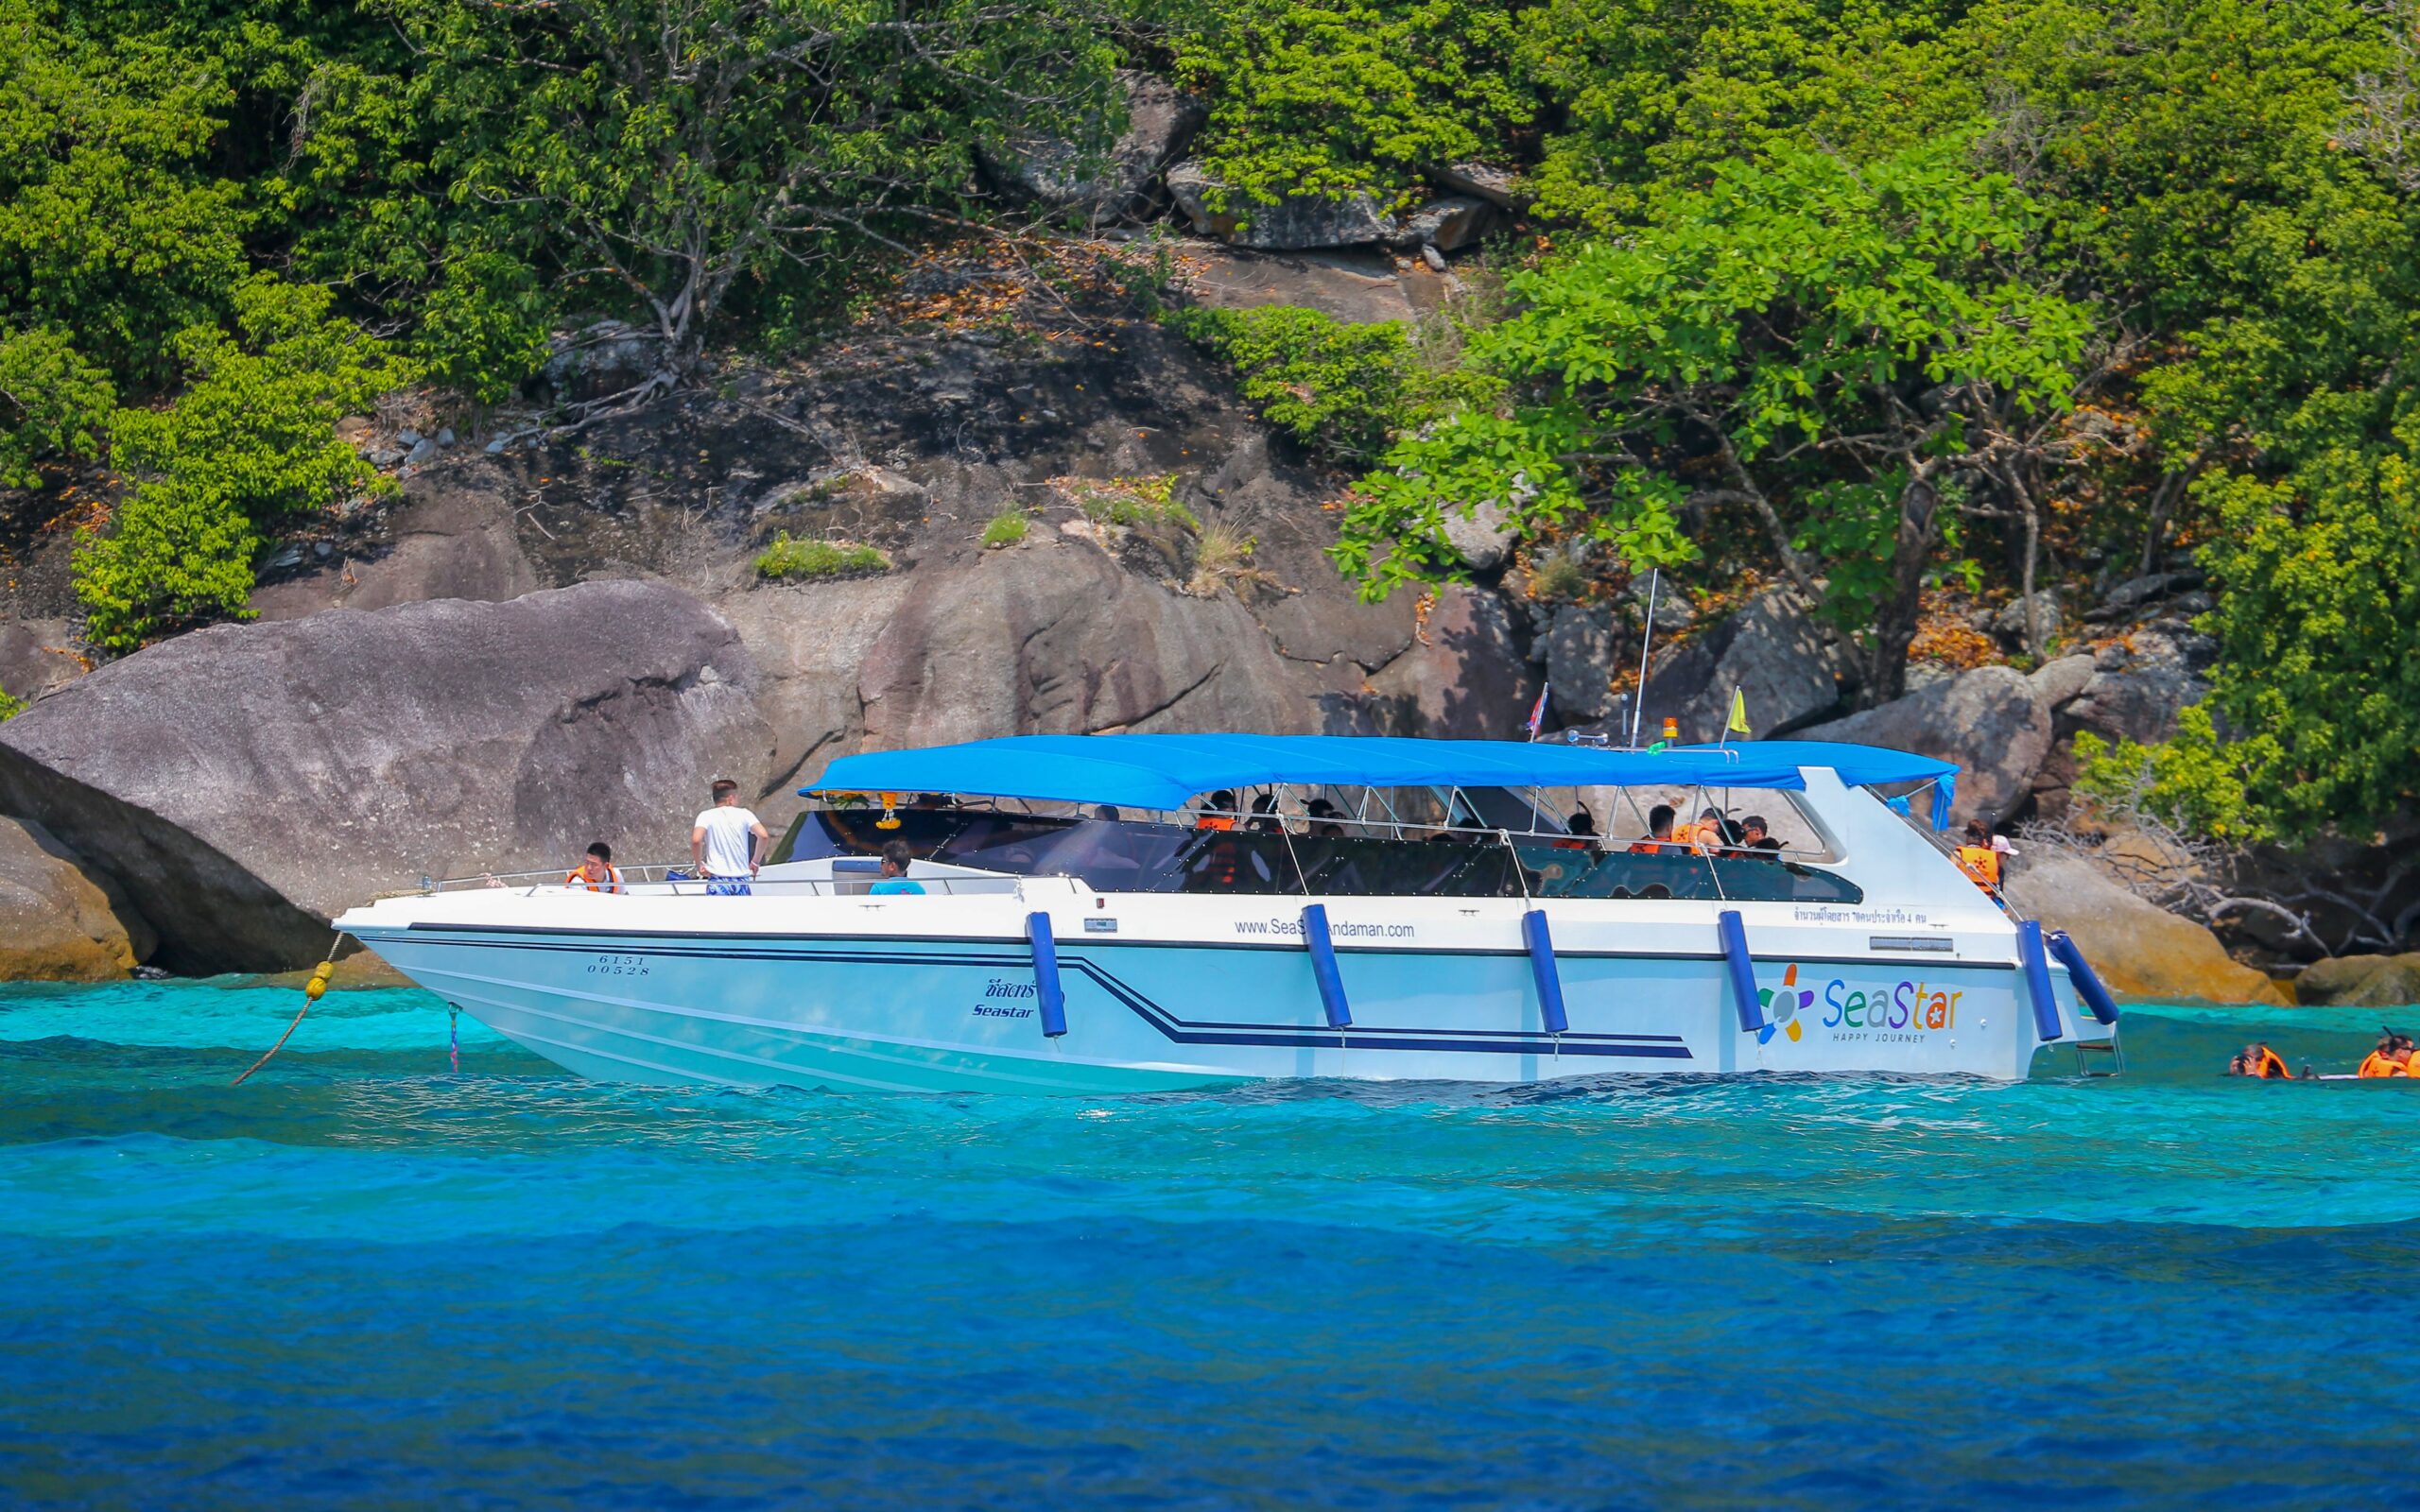 Phi Phi Island tour – Full day speedboat trip